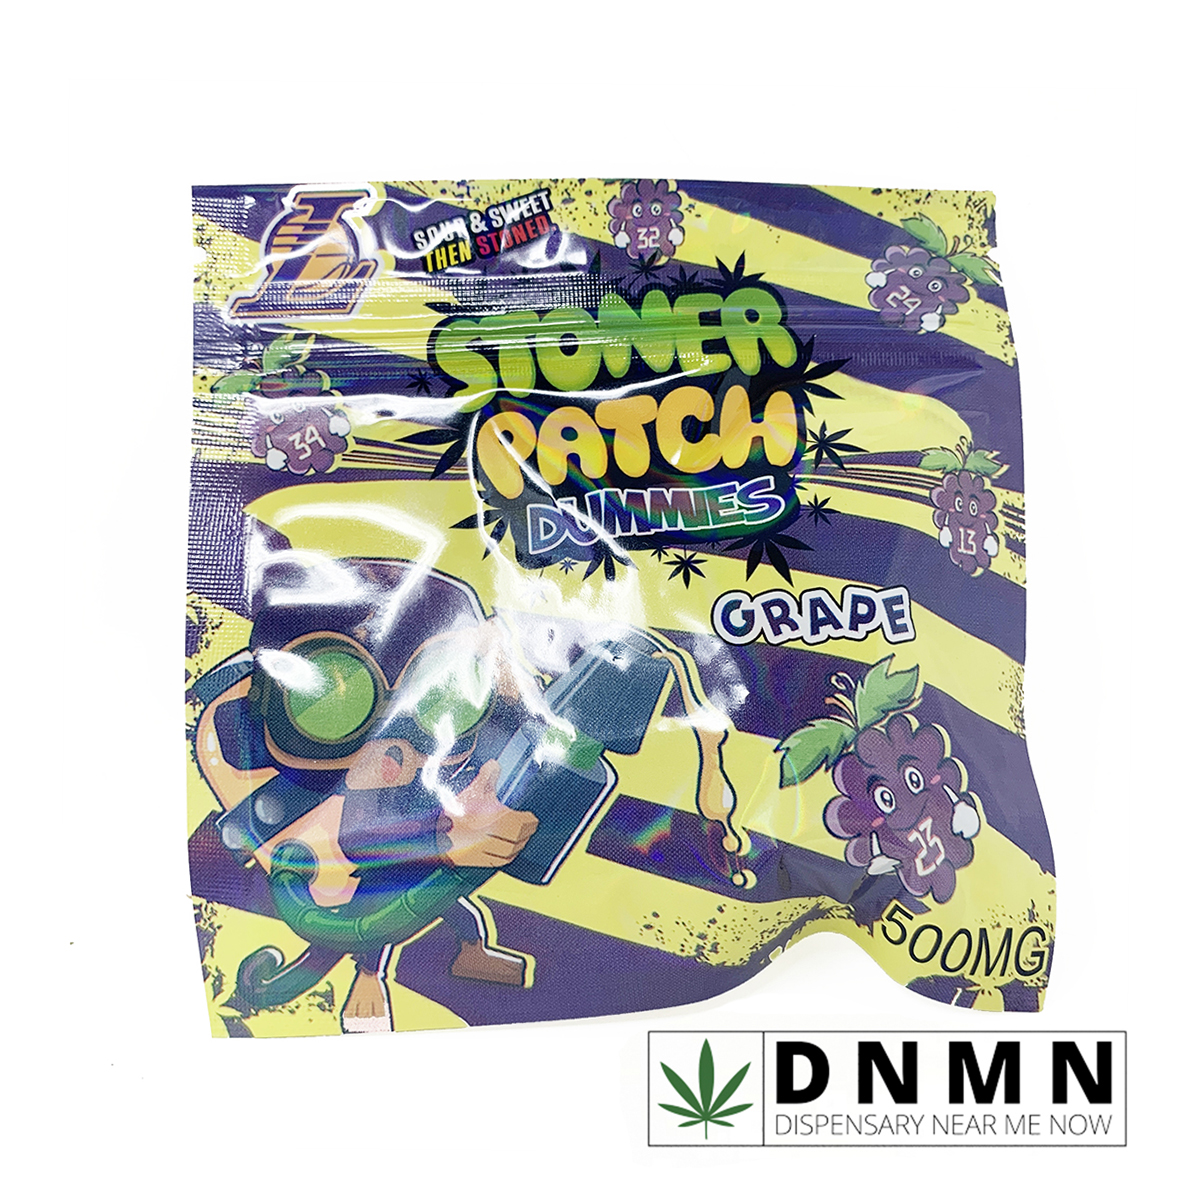 Stoner Patch Dummies – Grape | Buy Edibles Online | Dispensary Near Me